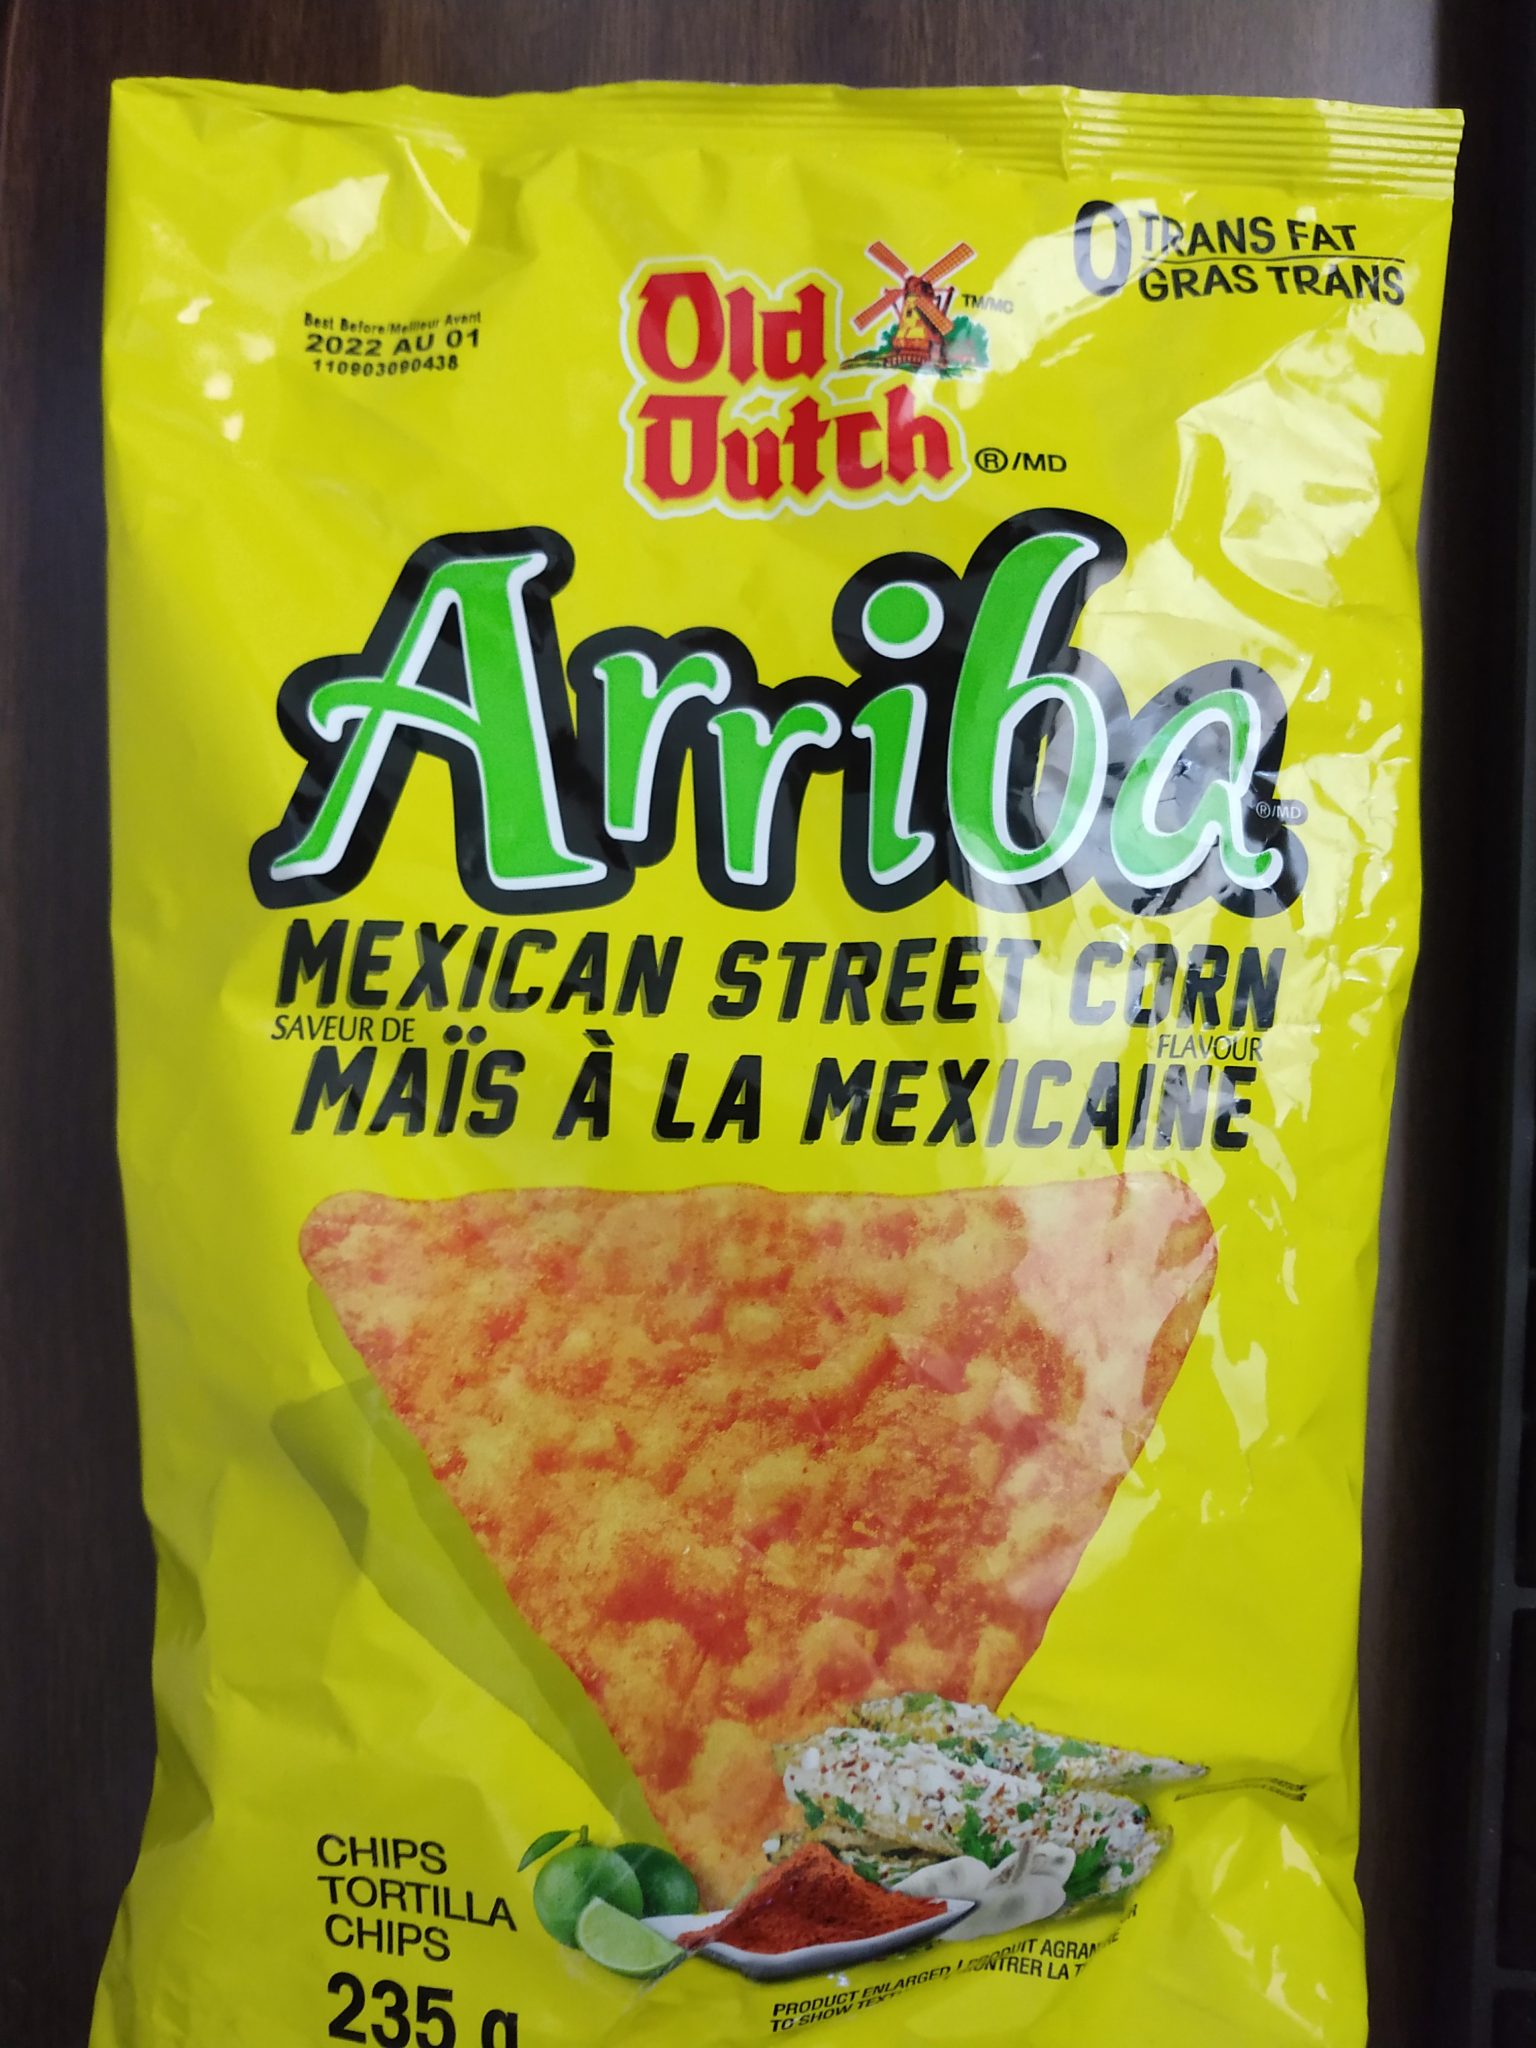 Arriba – Mexican Street Corn Tortilla Chips